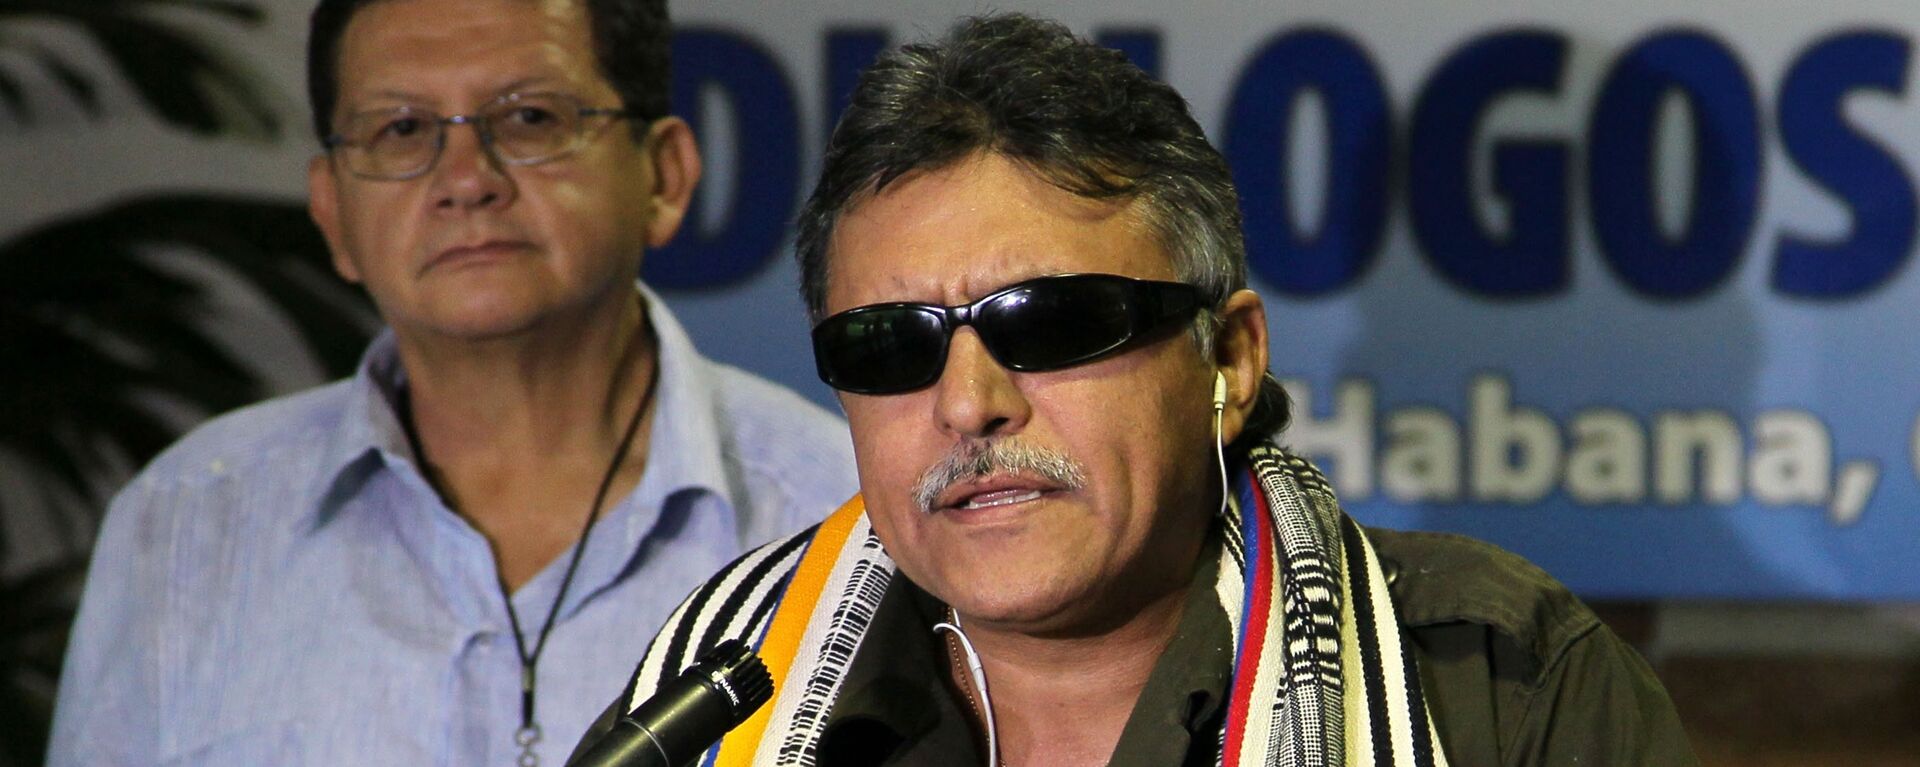 Jesús Santrich, exguerrillero colombiano, integrante del partido político FARC - Sputnik Mundo, 1920, 24.02.2021